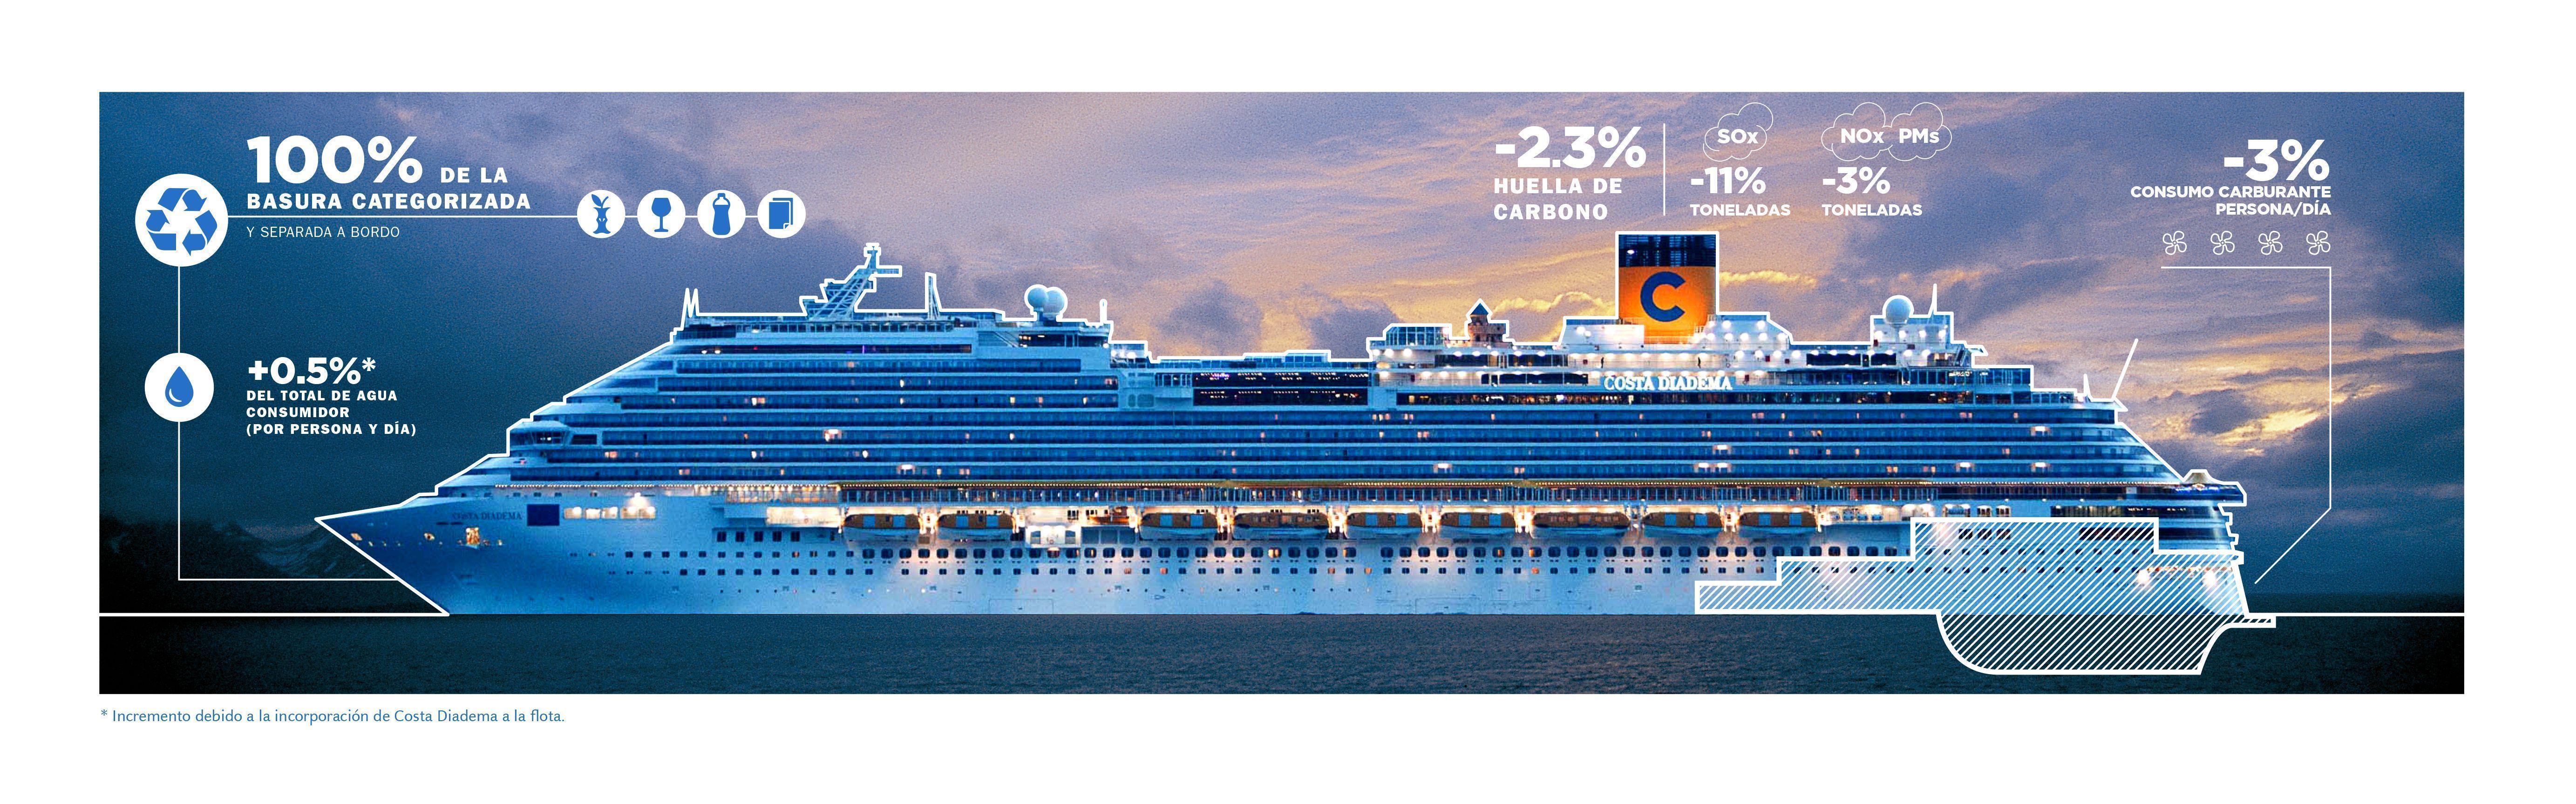 Costa-Cruceros-Infografía-3-1.jpg